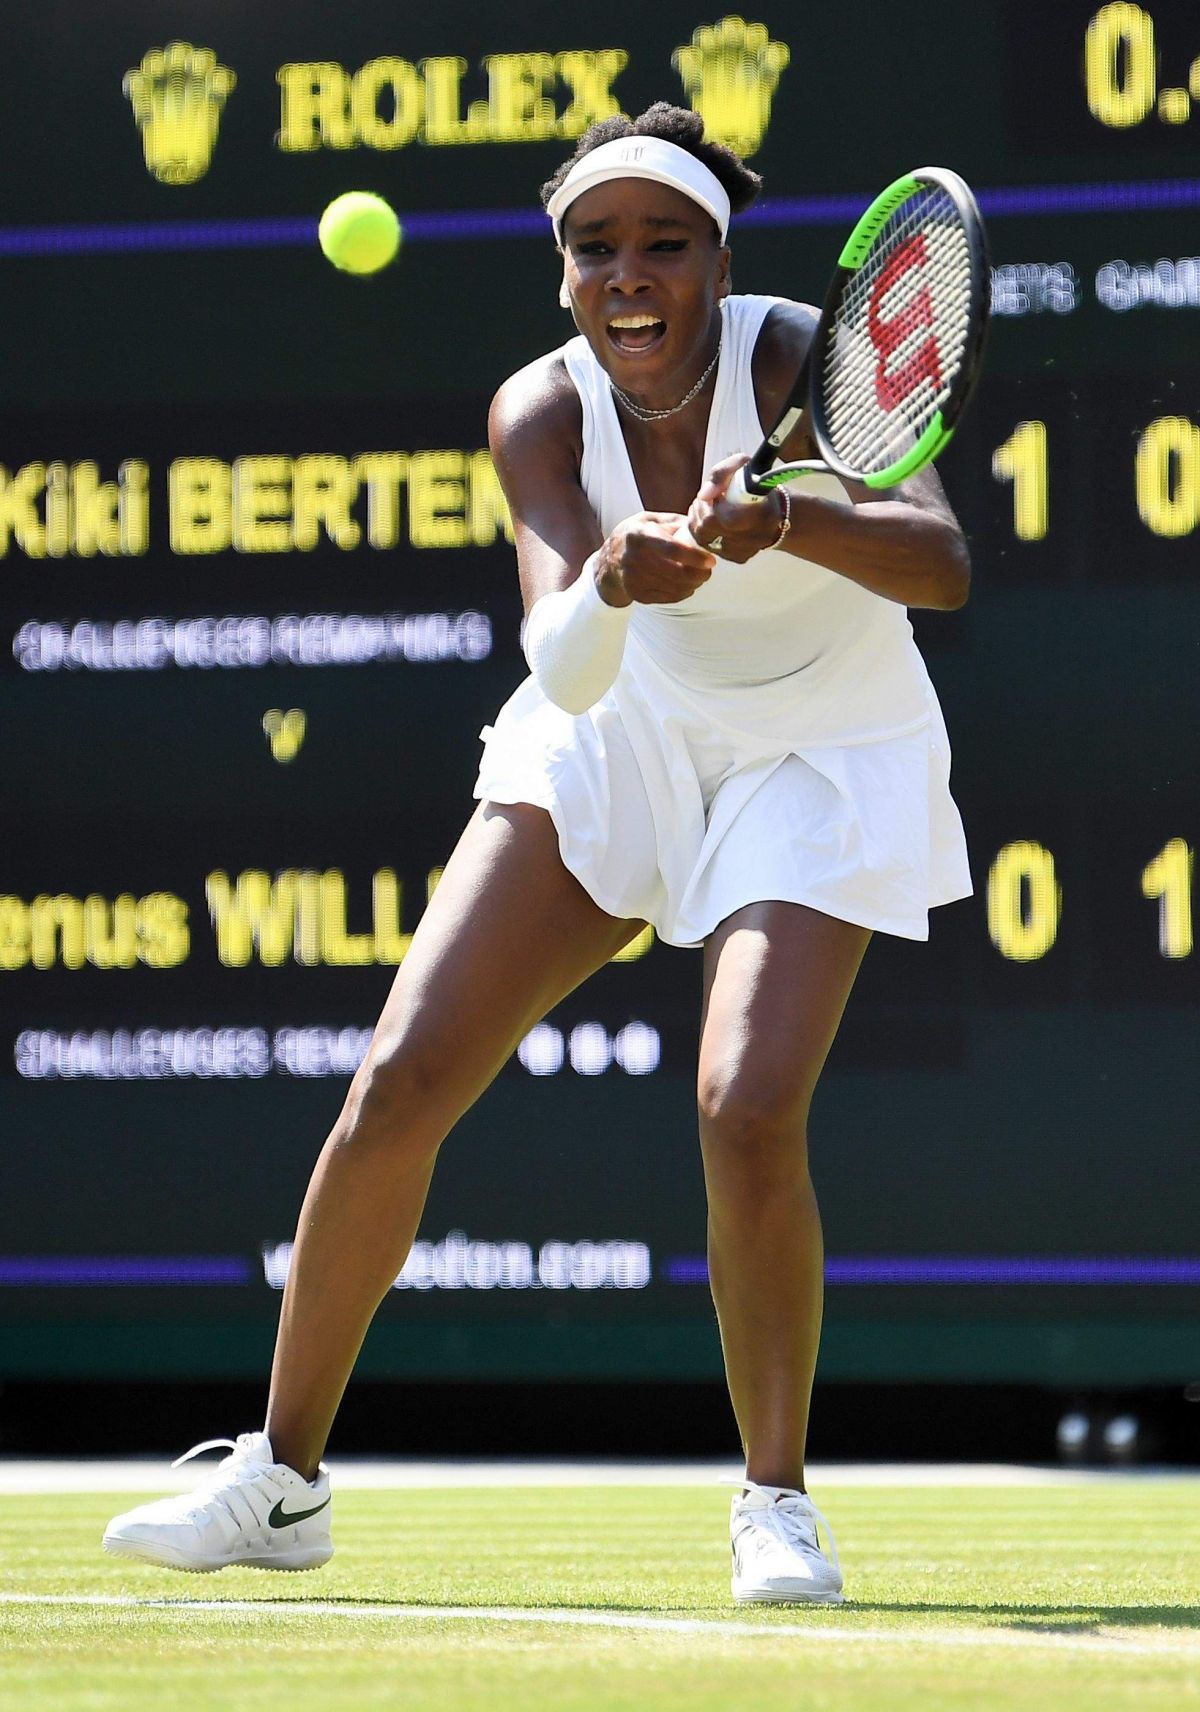 Venus Williams: A Champion of Health and Wellness